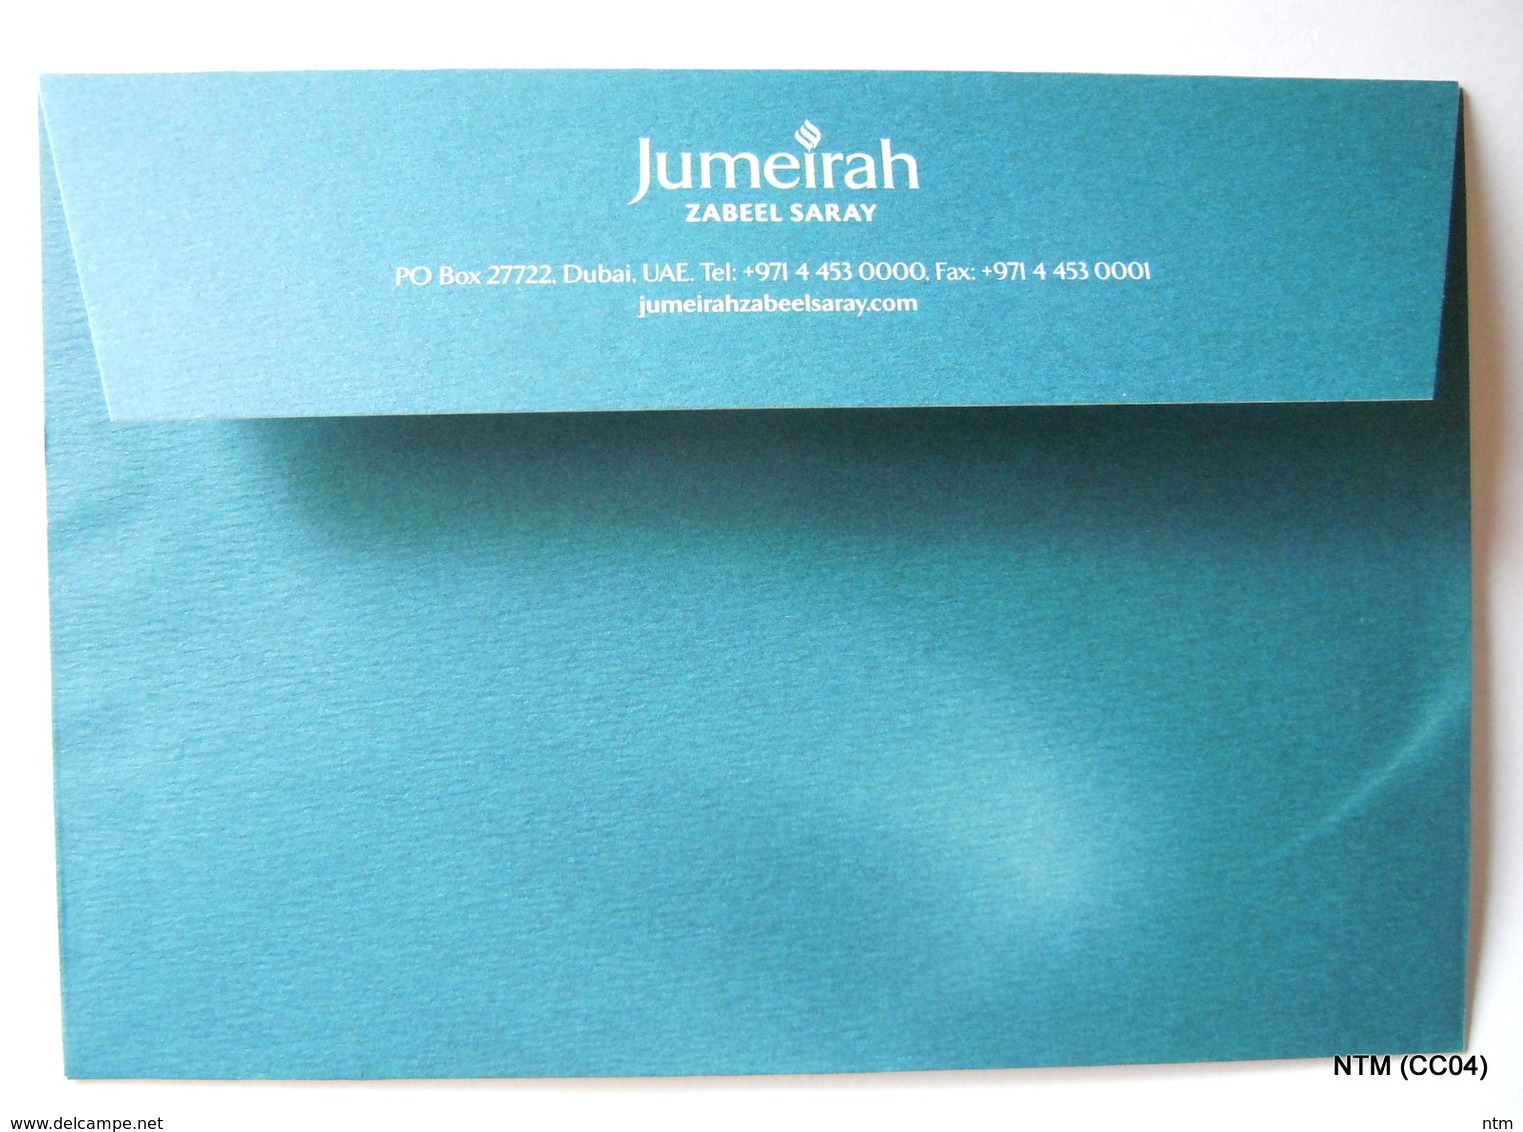 UAE DUBAI Picture Post Card (with An Envelope) Showing The Hotel 'Jumeirah Zabeel Saray' In Dubai, UAE - Dubai